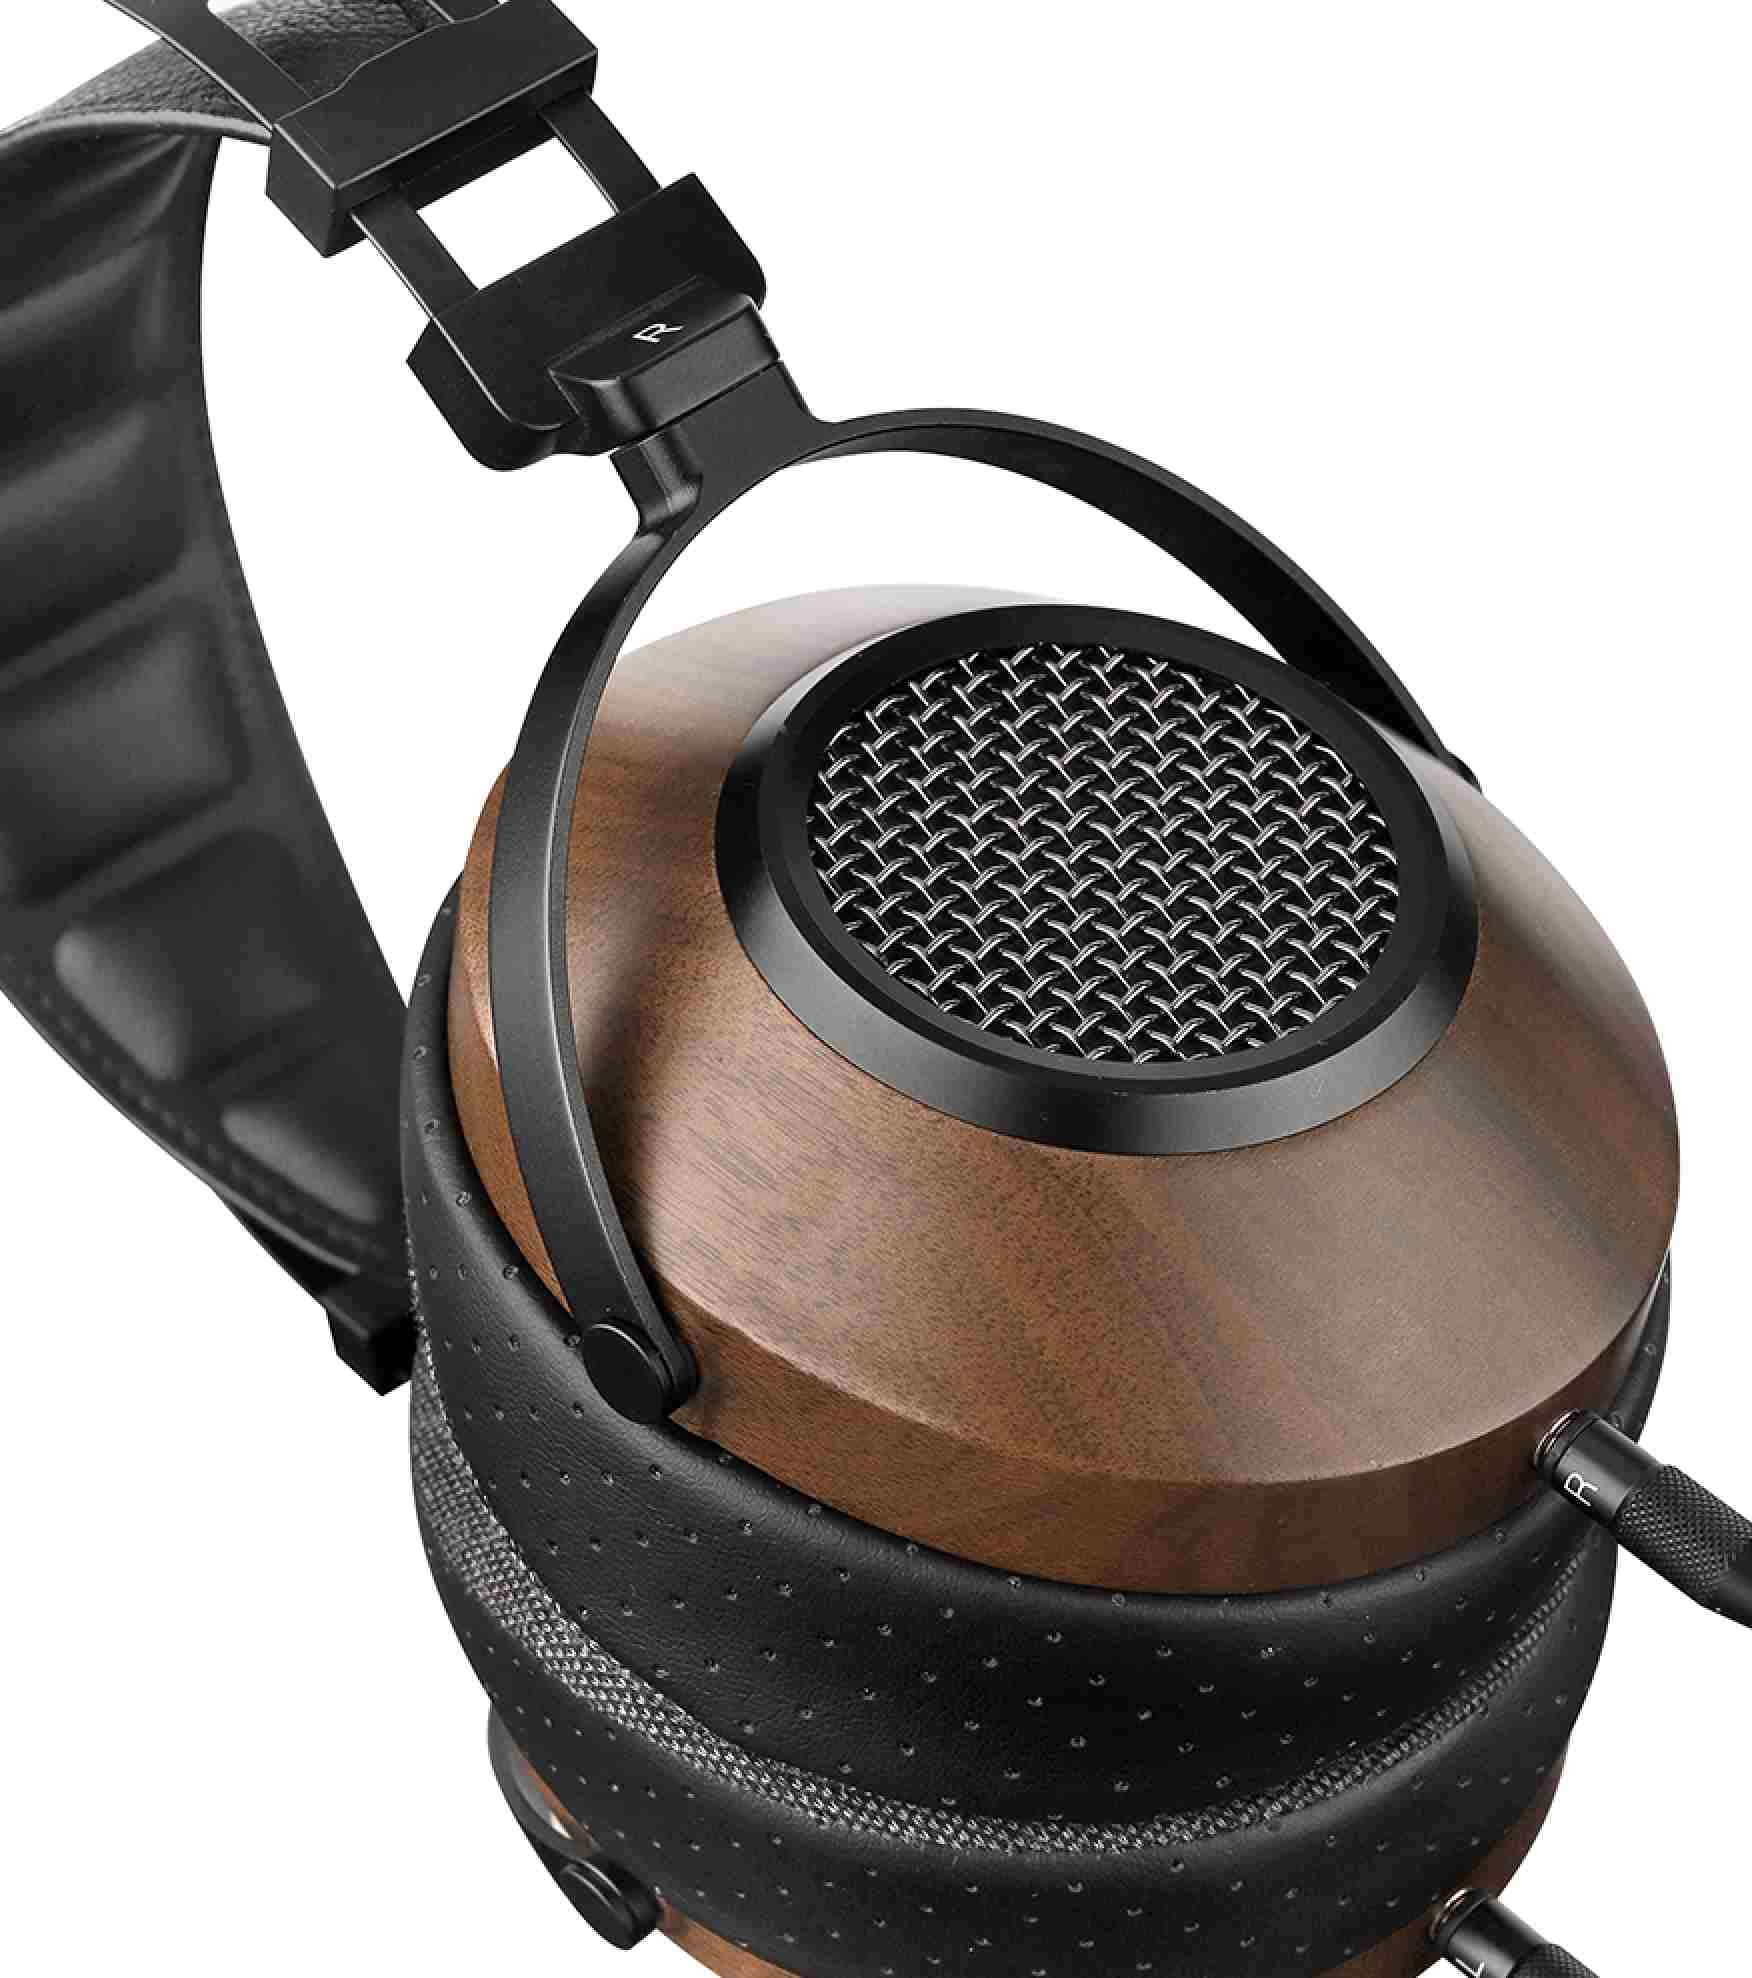 SV023 Headphones from SIVGA